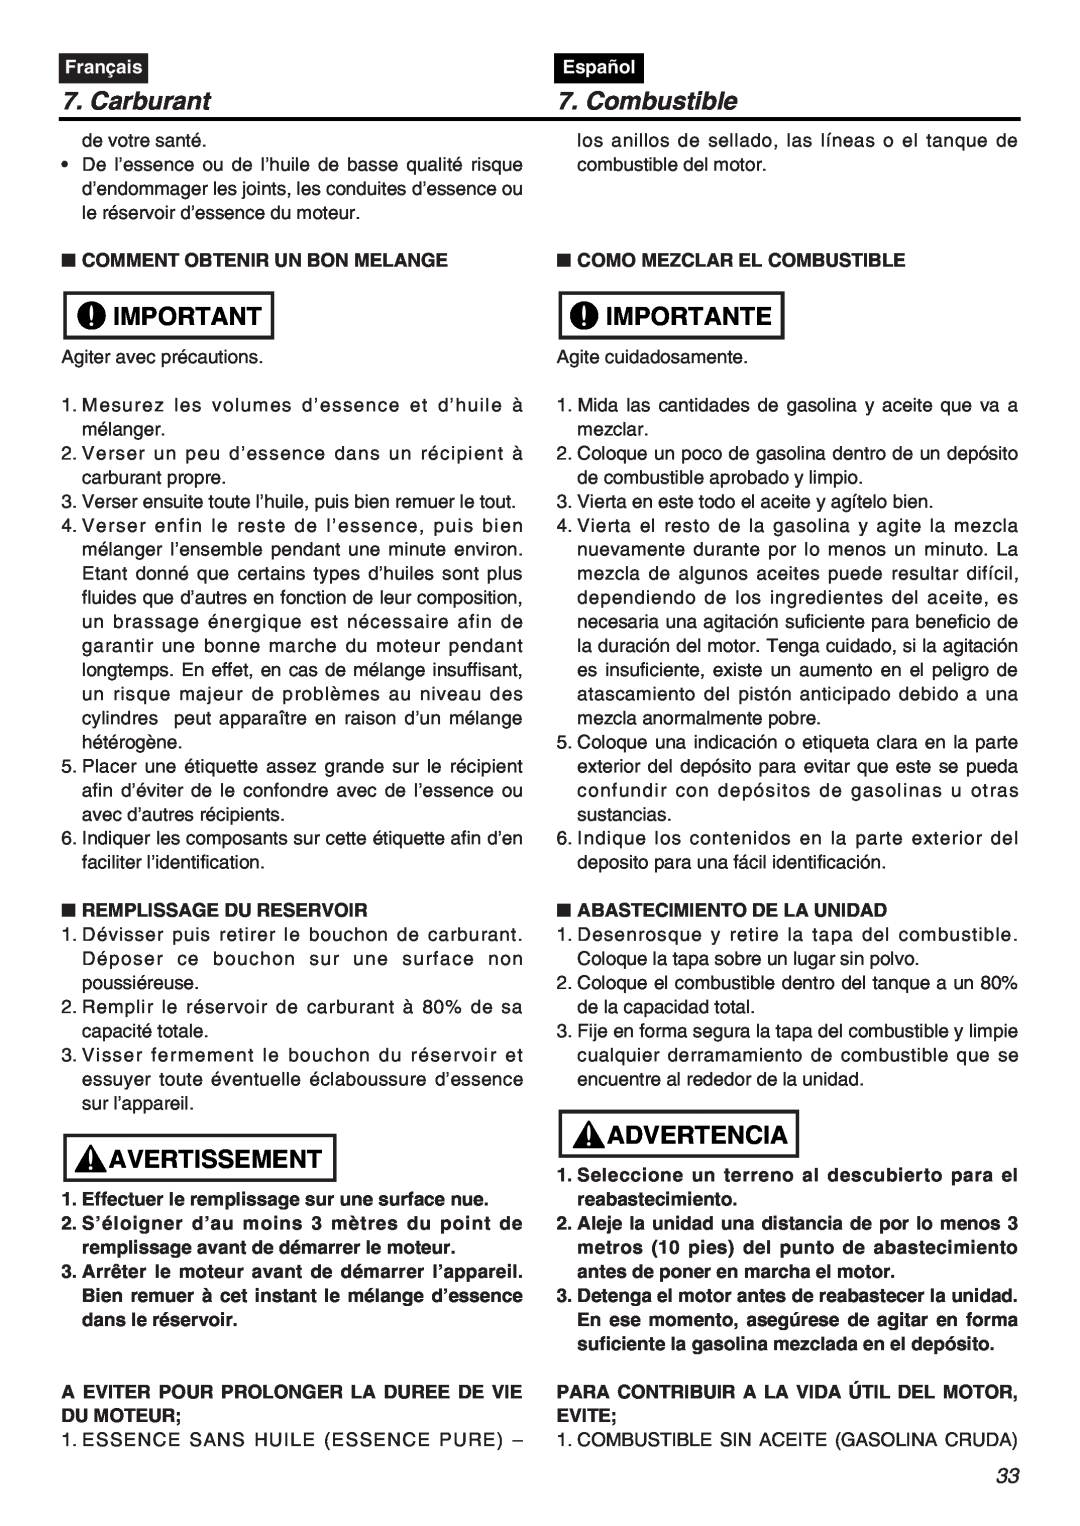 RedMax EXZ2401S-PH-CA manual Carburant, Combustible, Importante, Avertissement, Advertencia, Français, Español 